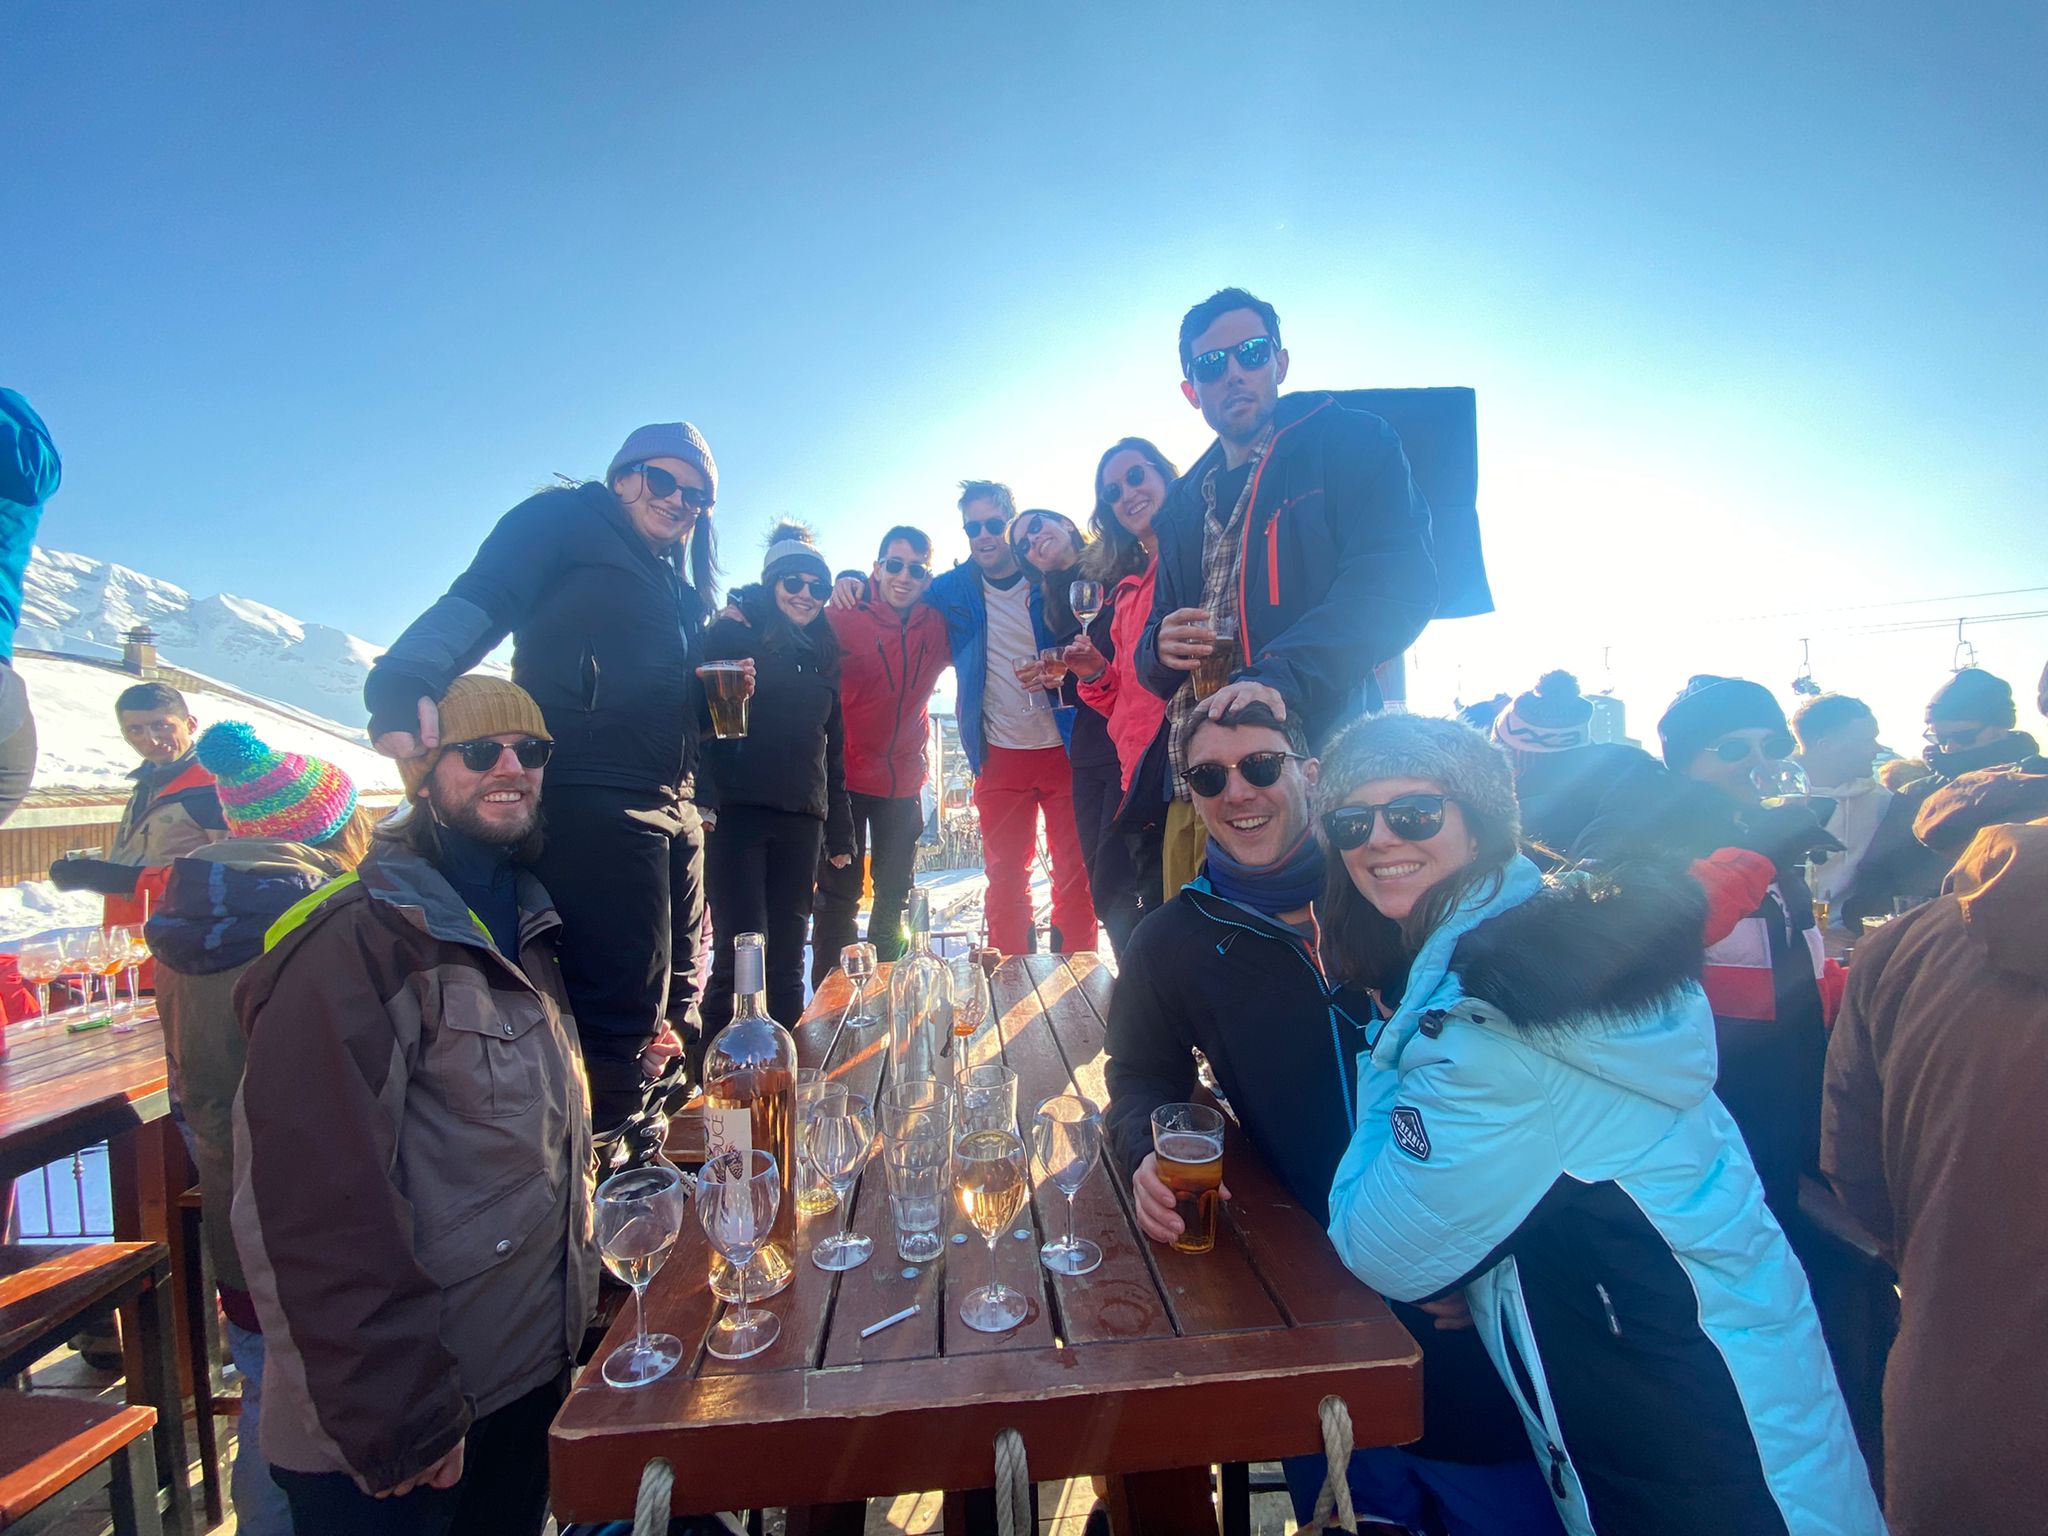 Winter Activities in Morzine for Non-Skiers